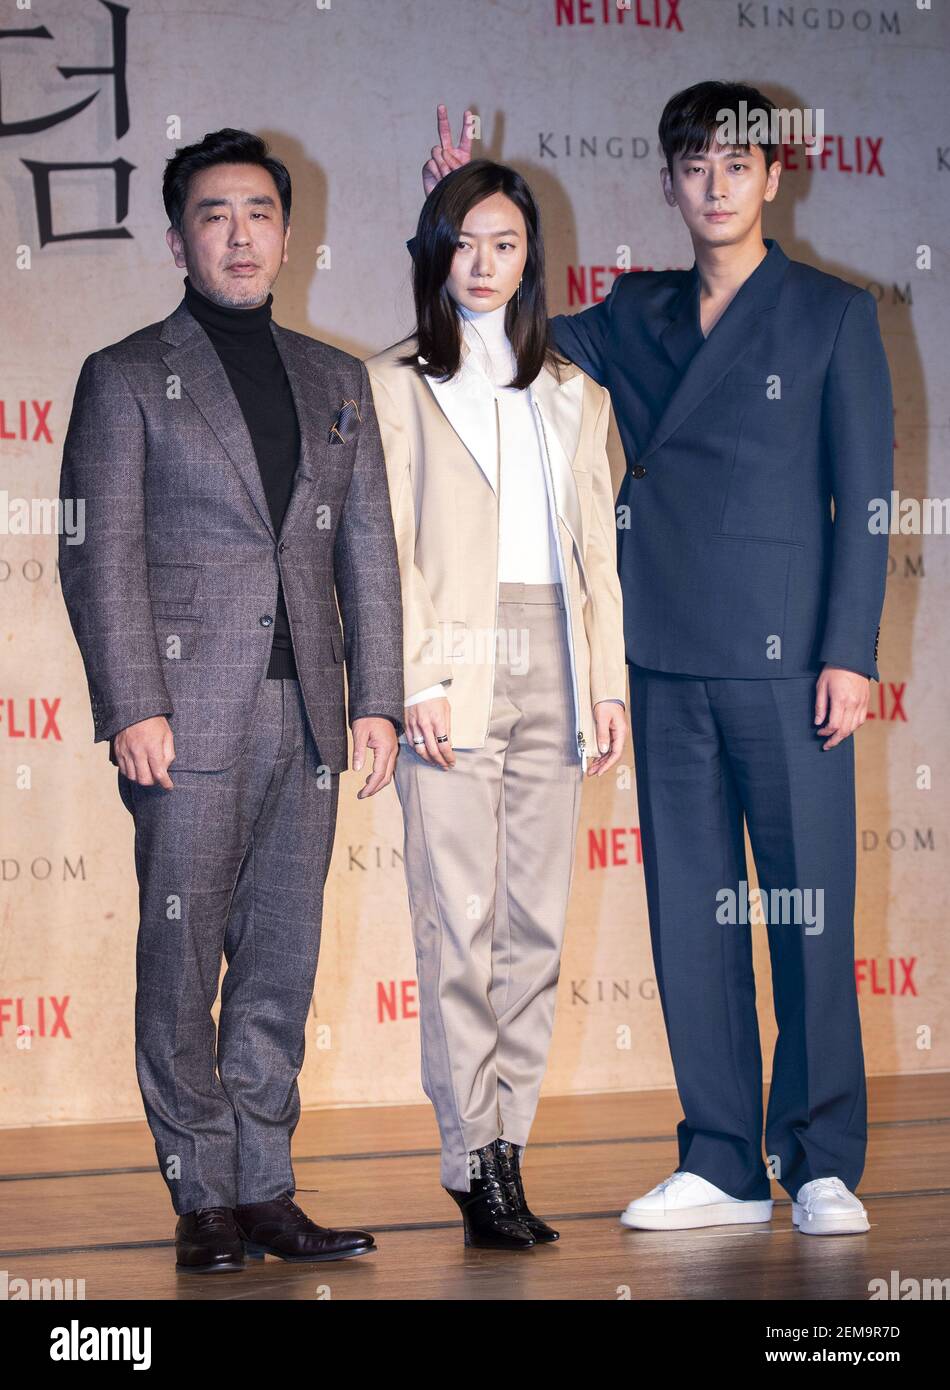 Cast of Kingdom Photoshoot  Ju Ji-hoon, Bae Doona, Ryu Seung-yong 